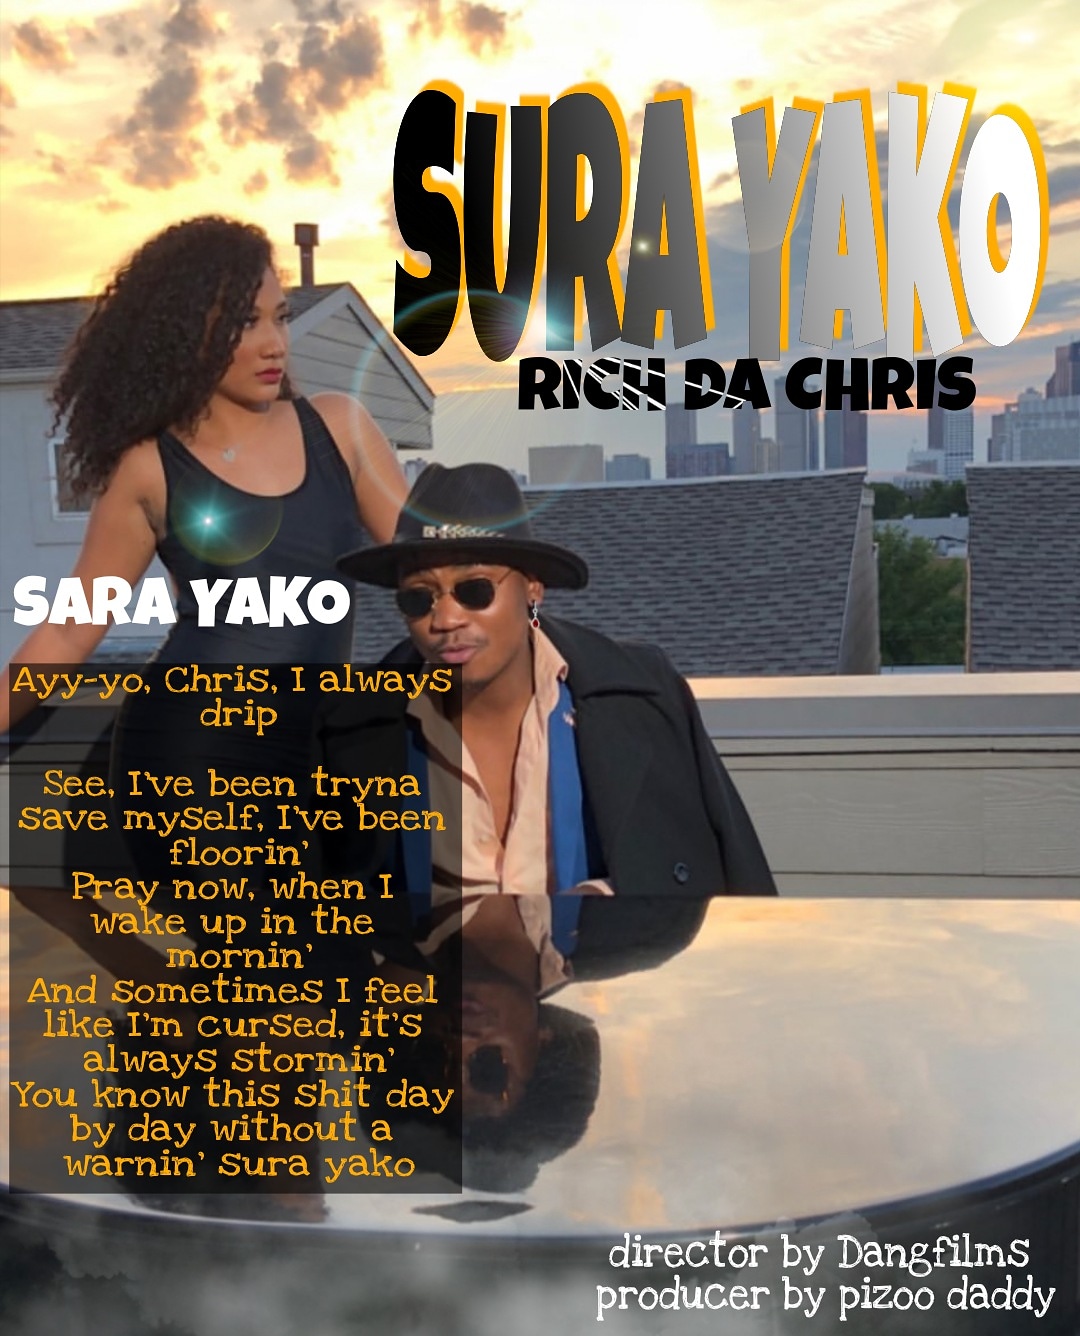 Sura yako by Rich Da Chris | Album